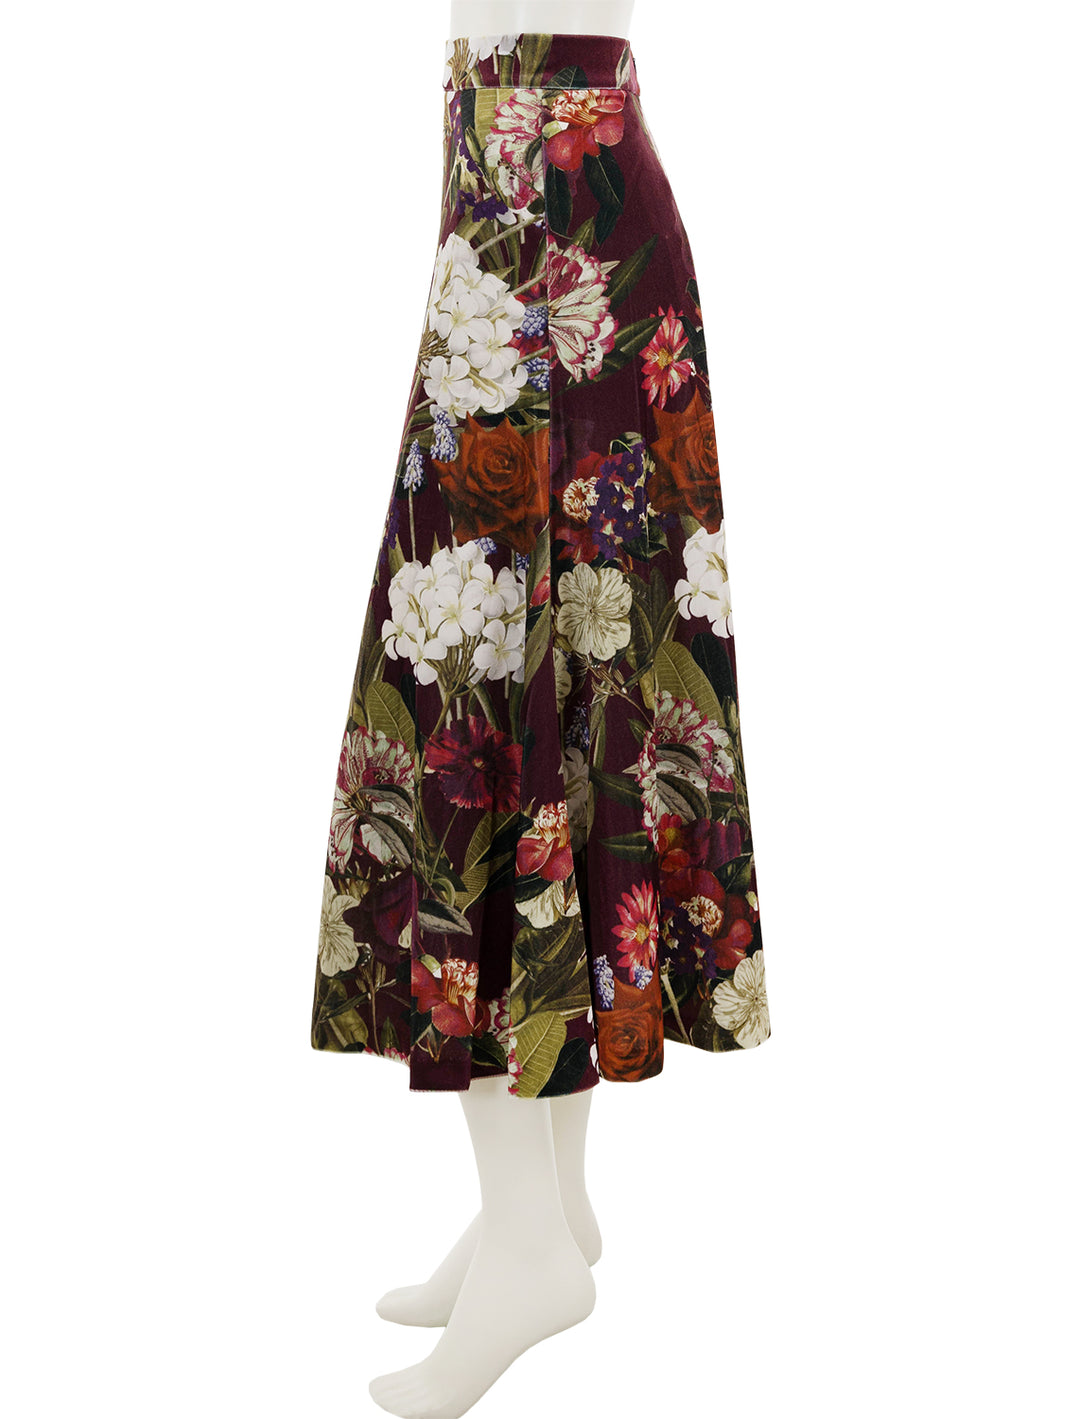 Side view of Cara Cara's gianna skirt in garden flora.